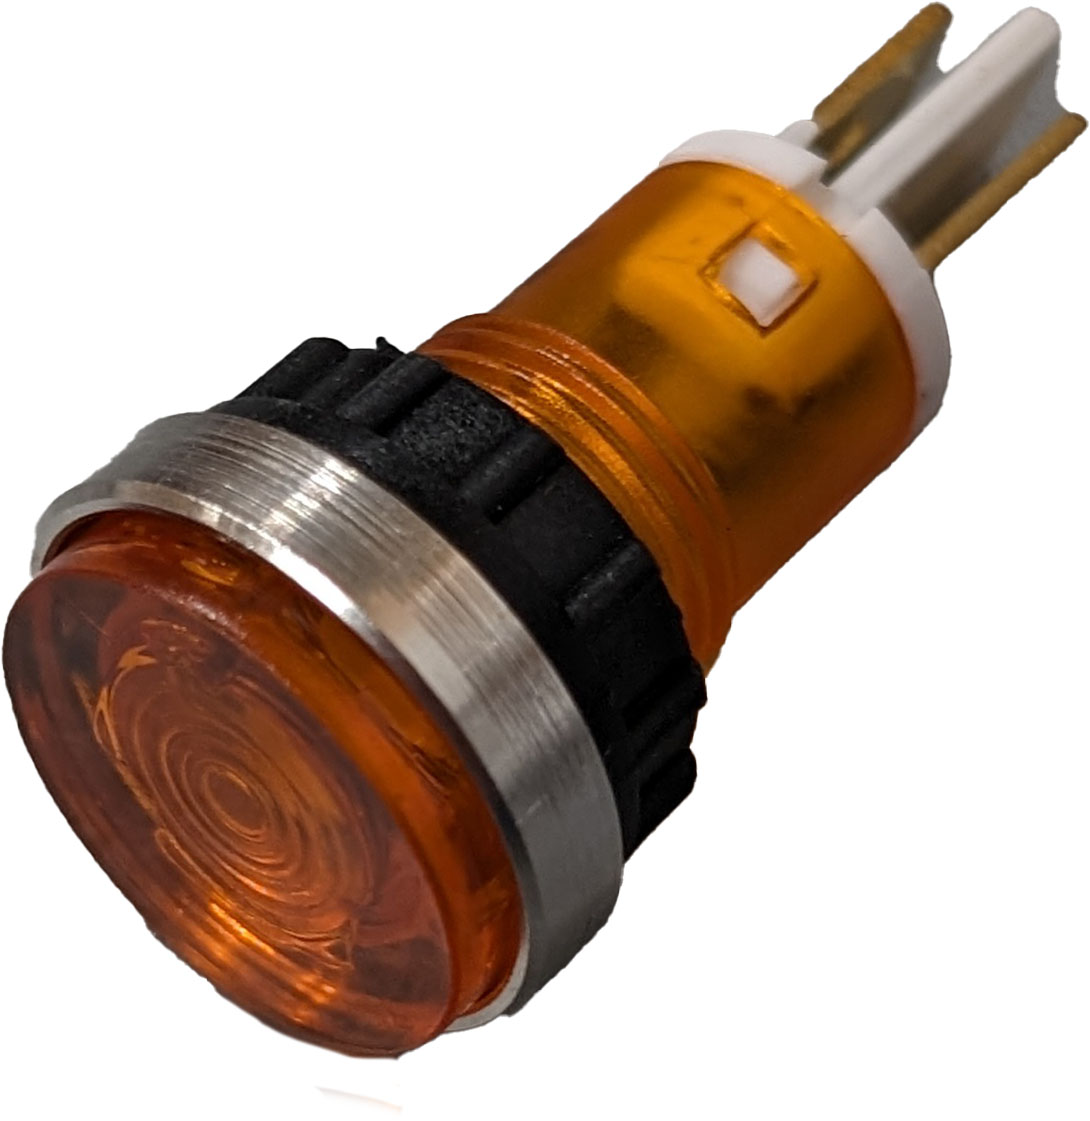 Kontrolllampe orange - ECM / Profitec